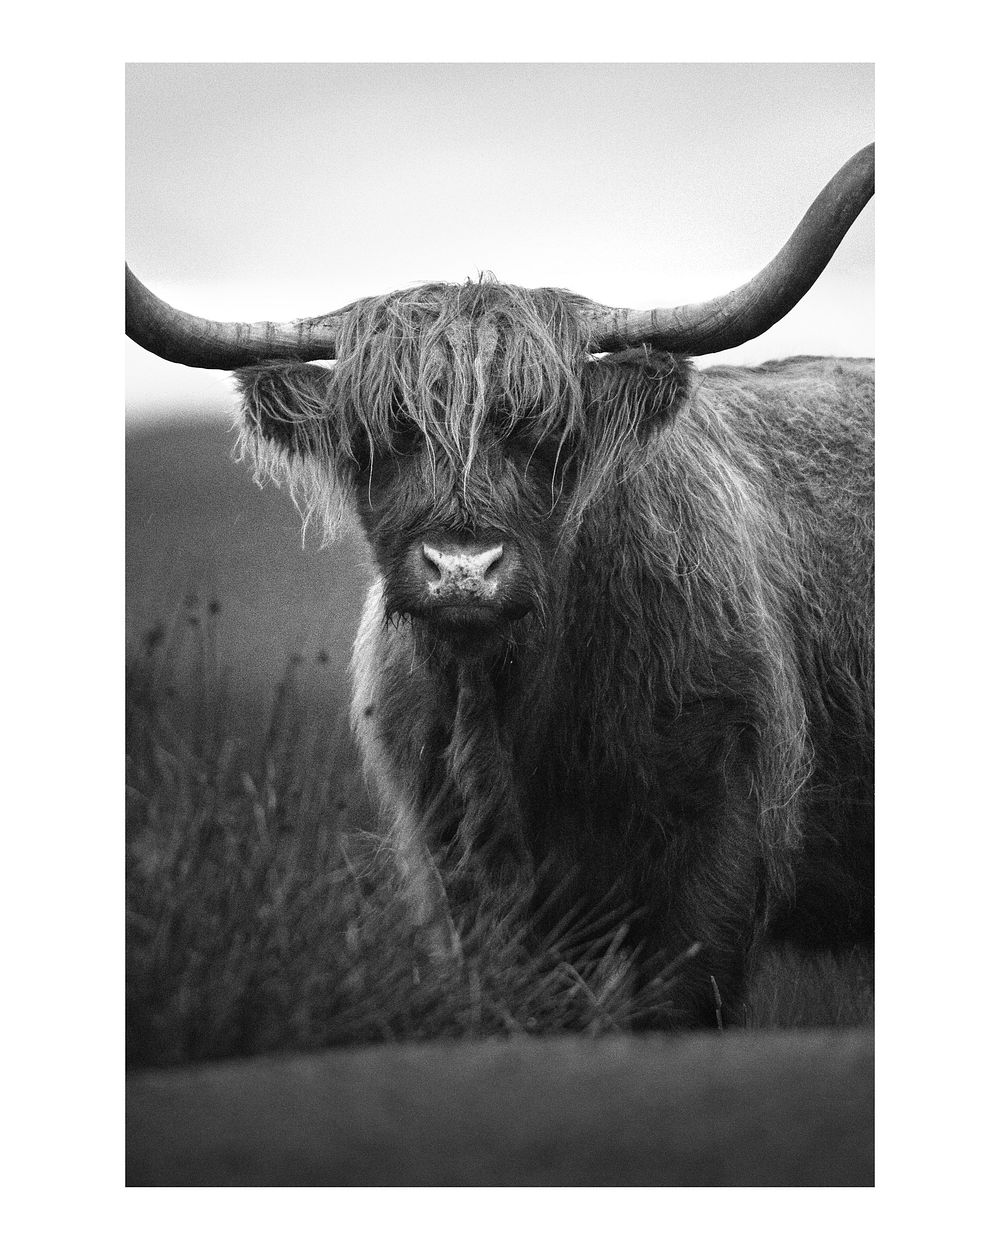 Hairy Scottish Highland cattle art print poster monotone, wildlife wall decor